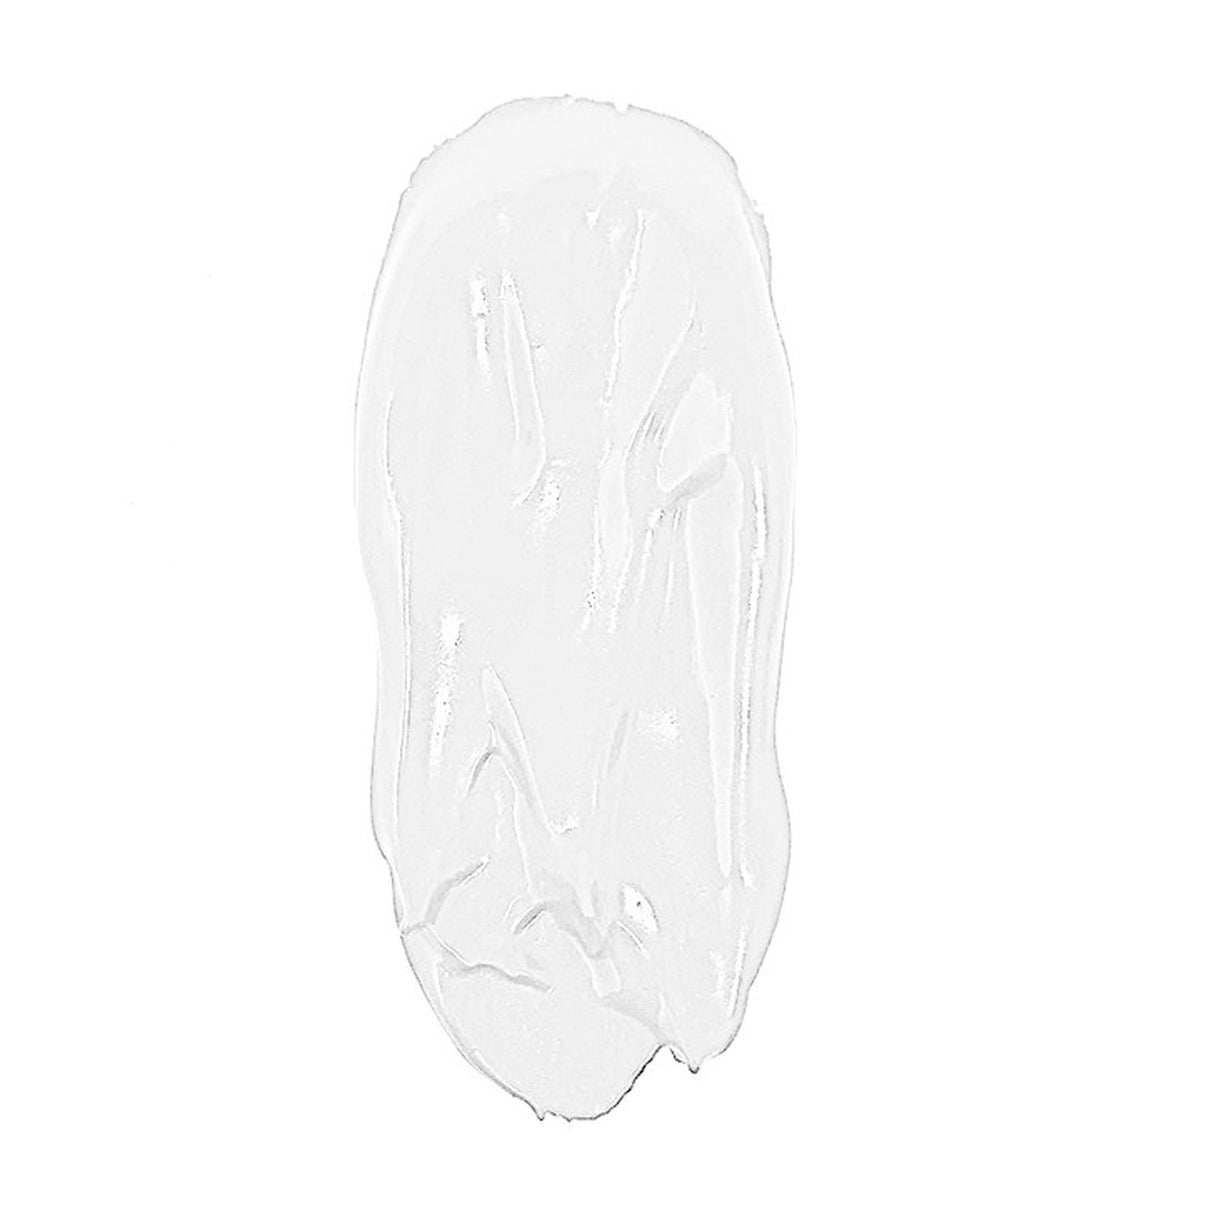 H M NOUVEAUTE LTEE Costume Accessories Fantasy FX white cream makeup tube, 1 ounce 764294501017